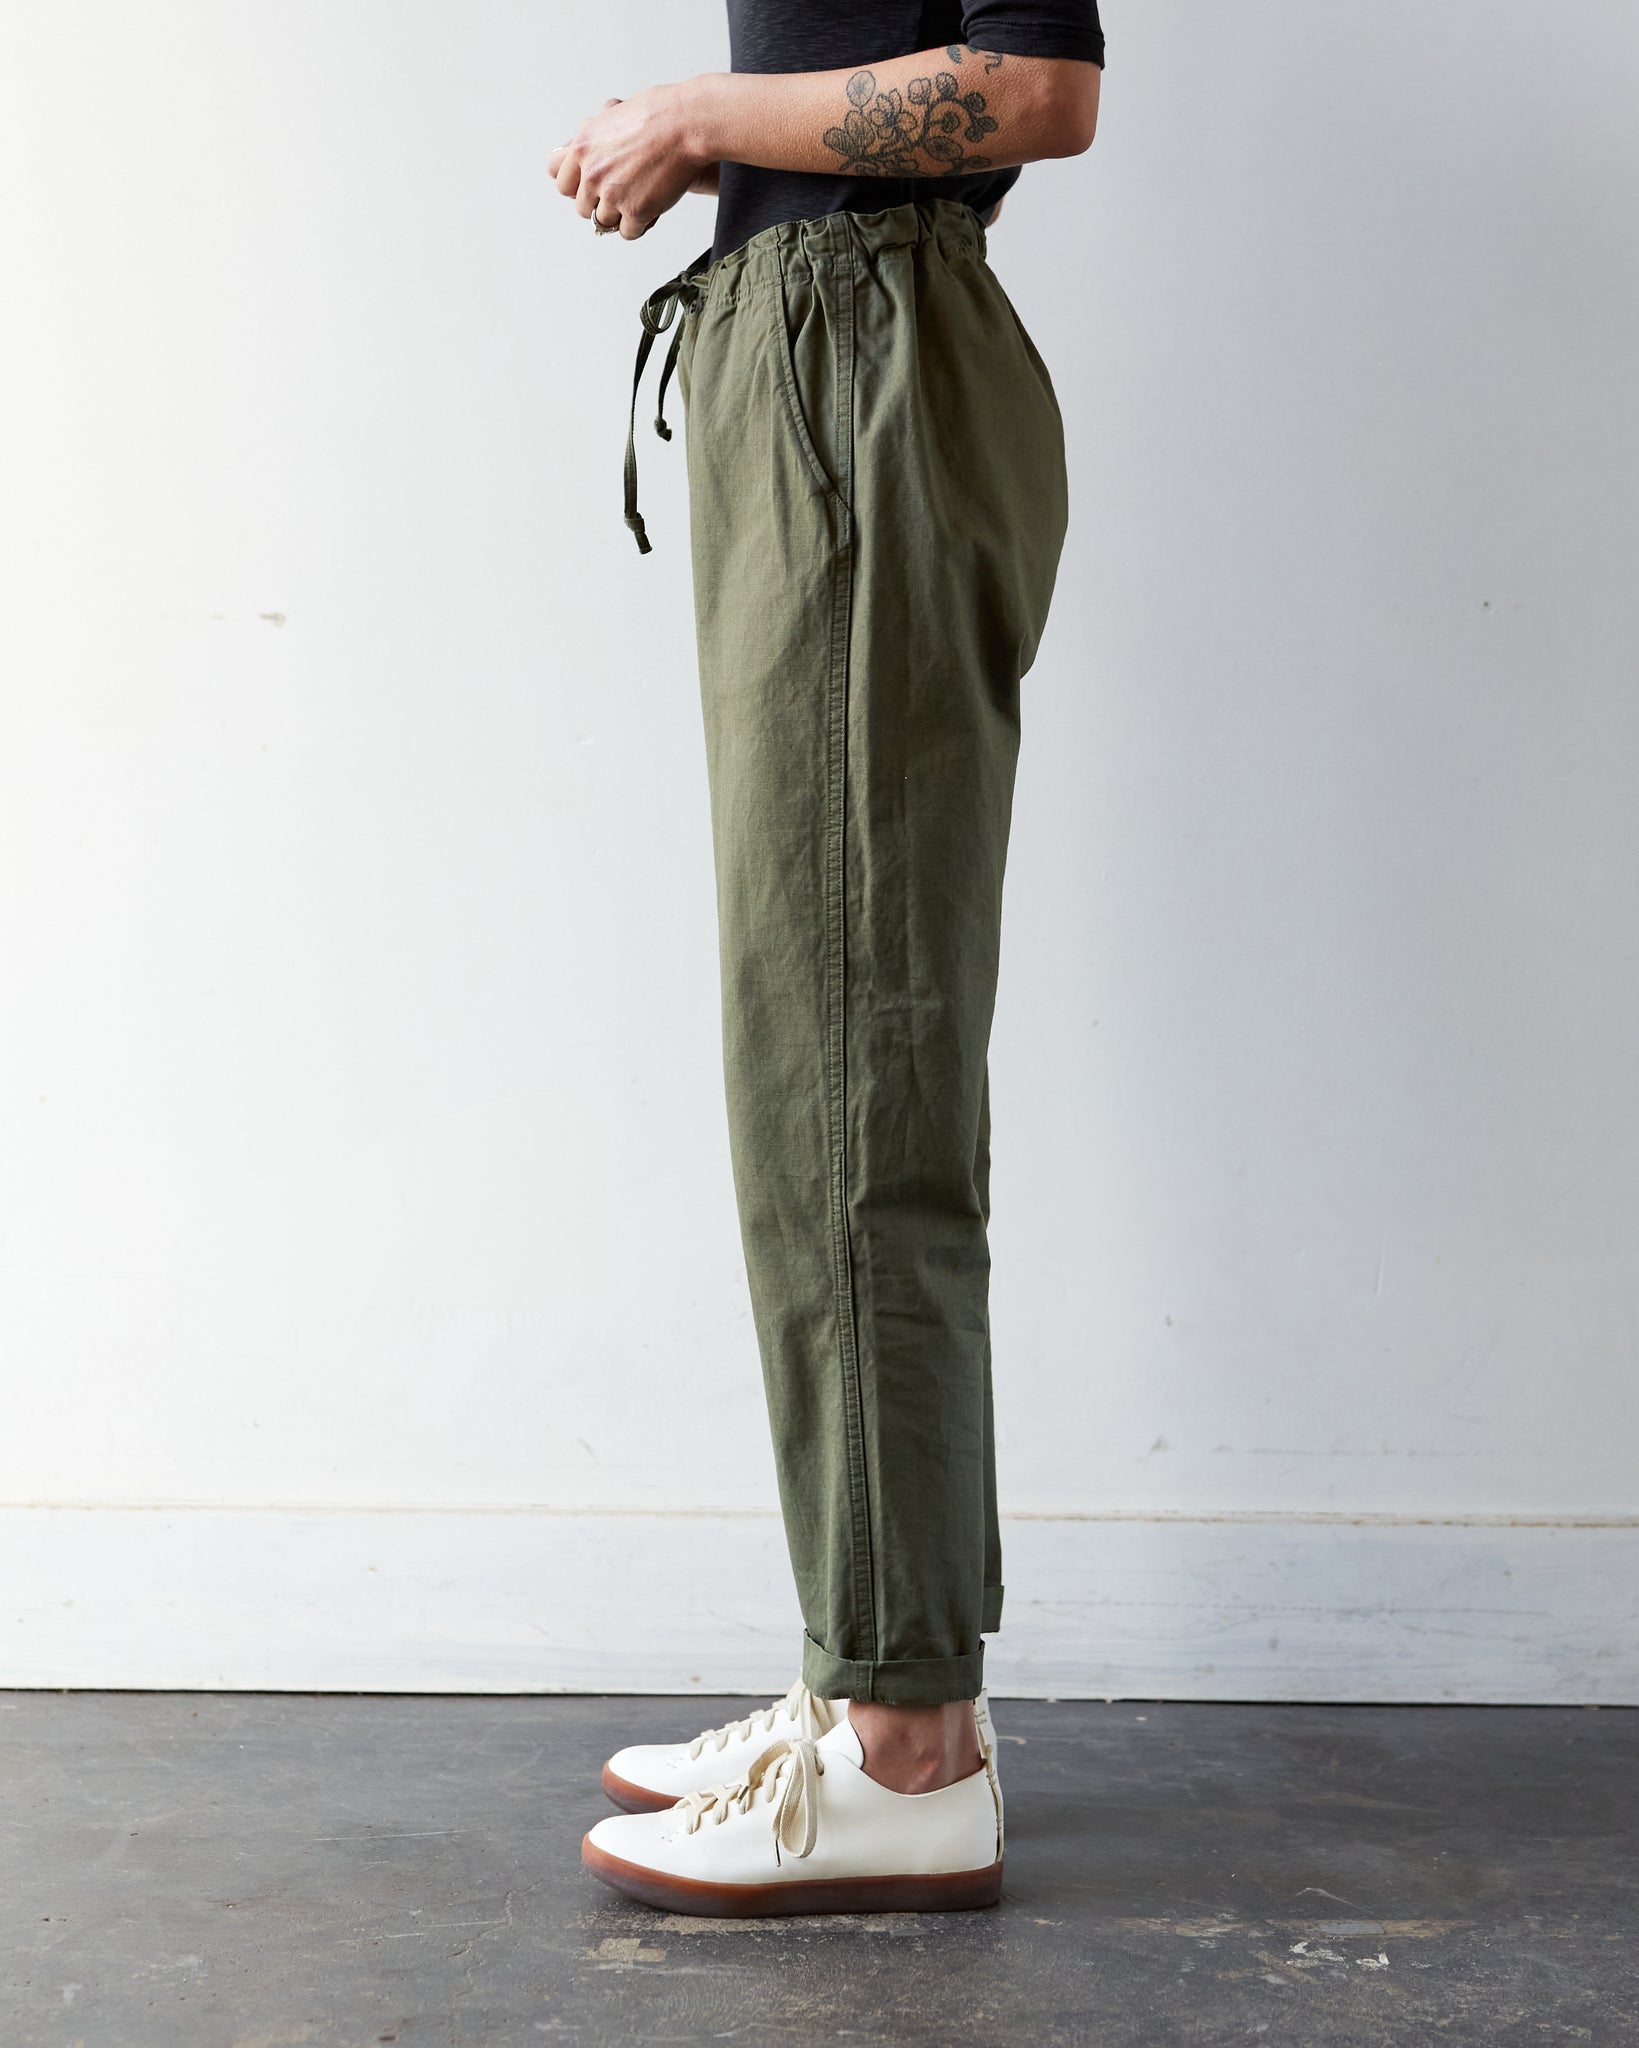 Barney New York Cop Op Women's Cargo Pants Zipper Pockets Green Size 27 |  eBay